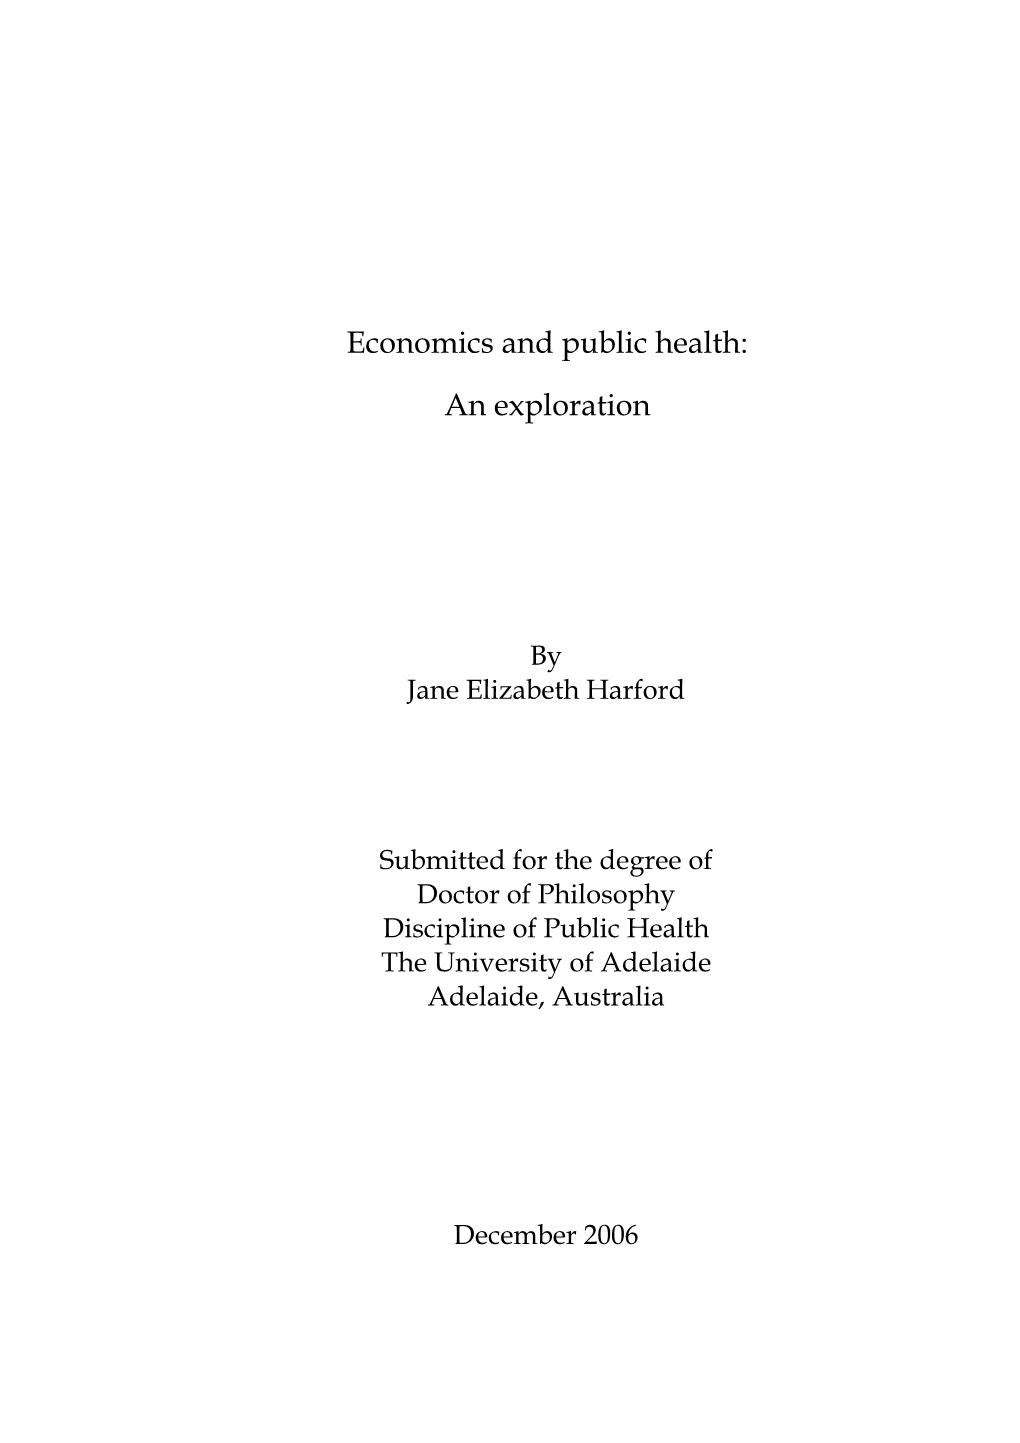 Economics and Public Health: an Exploration